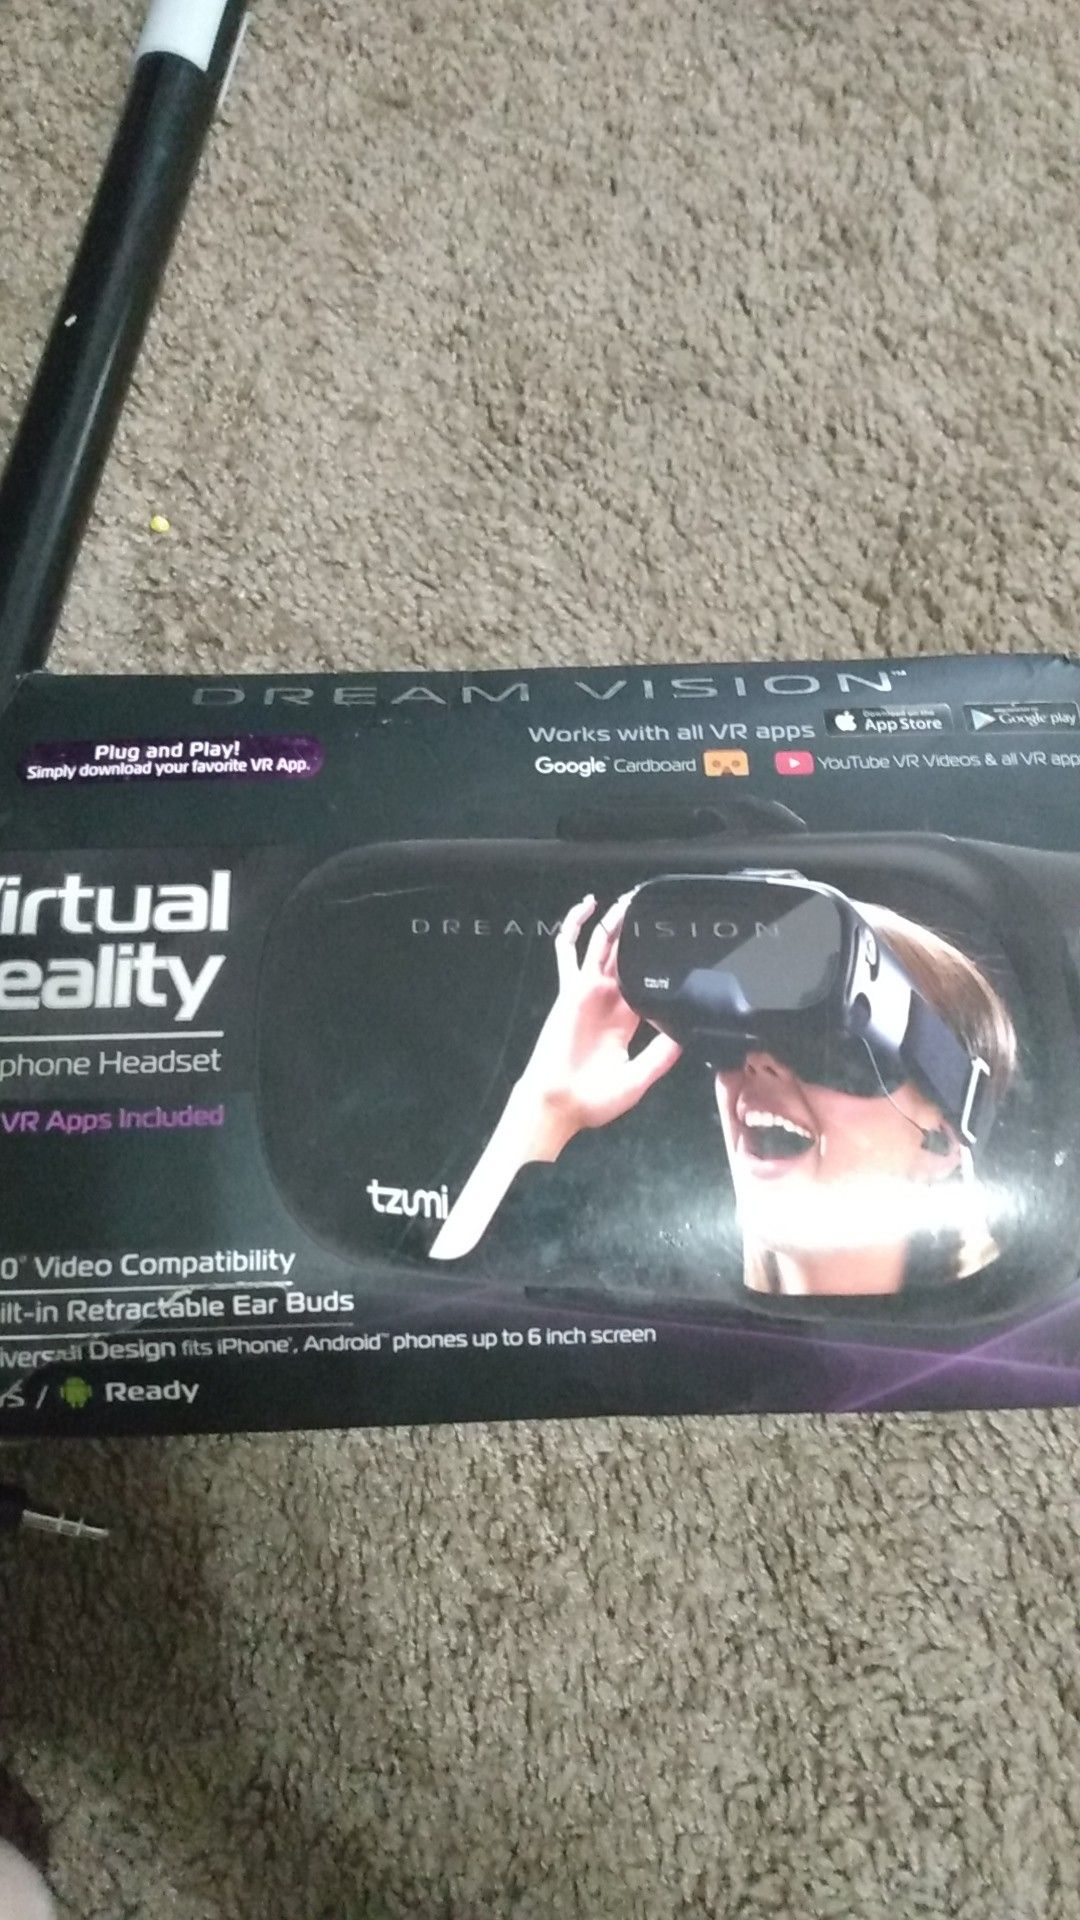 Dream vision virtual reality smartphone headset